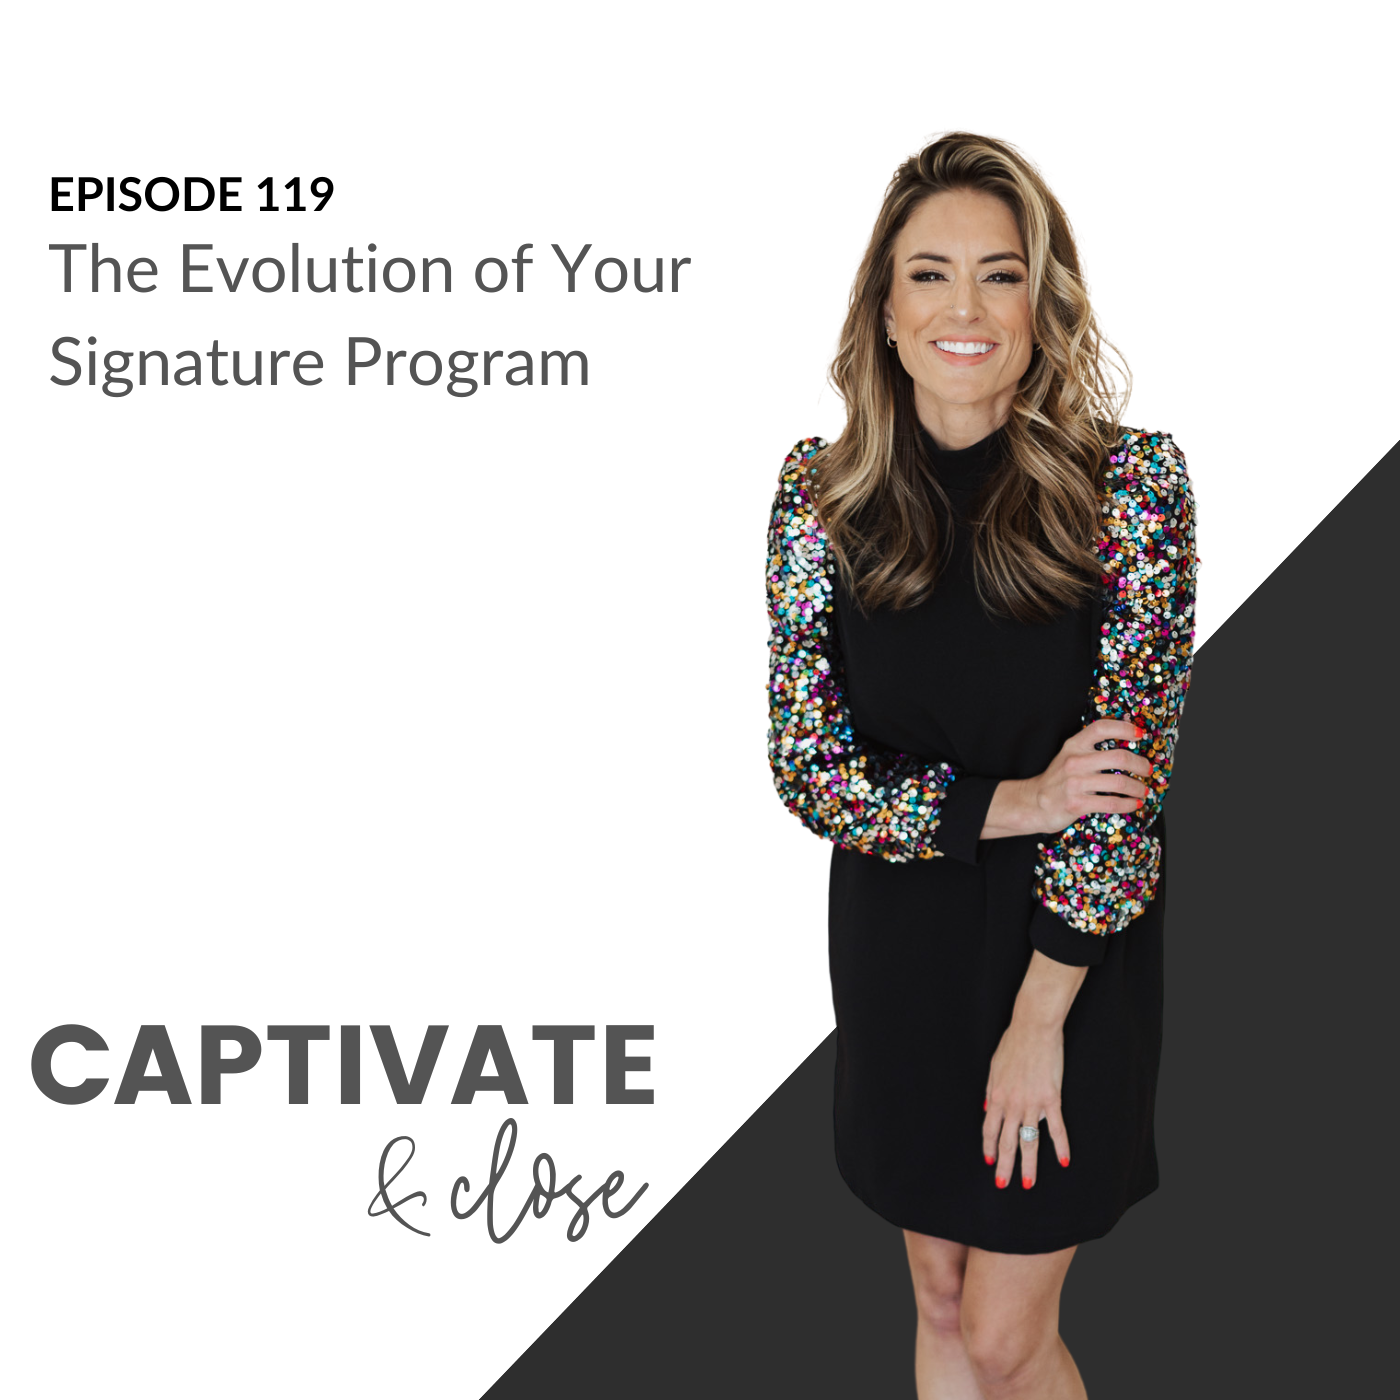 The Evolution of Your Signature Program